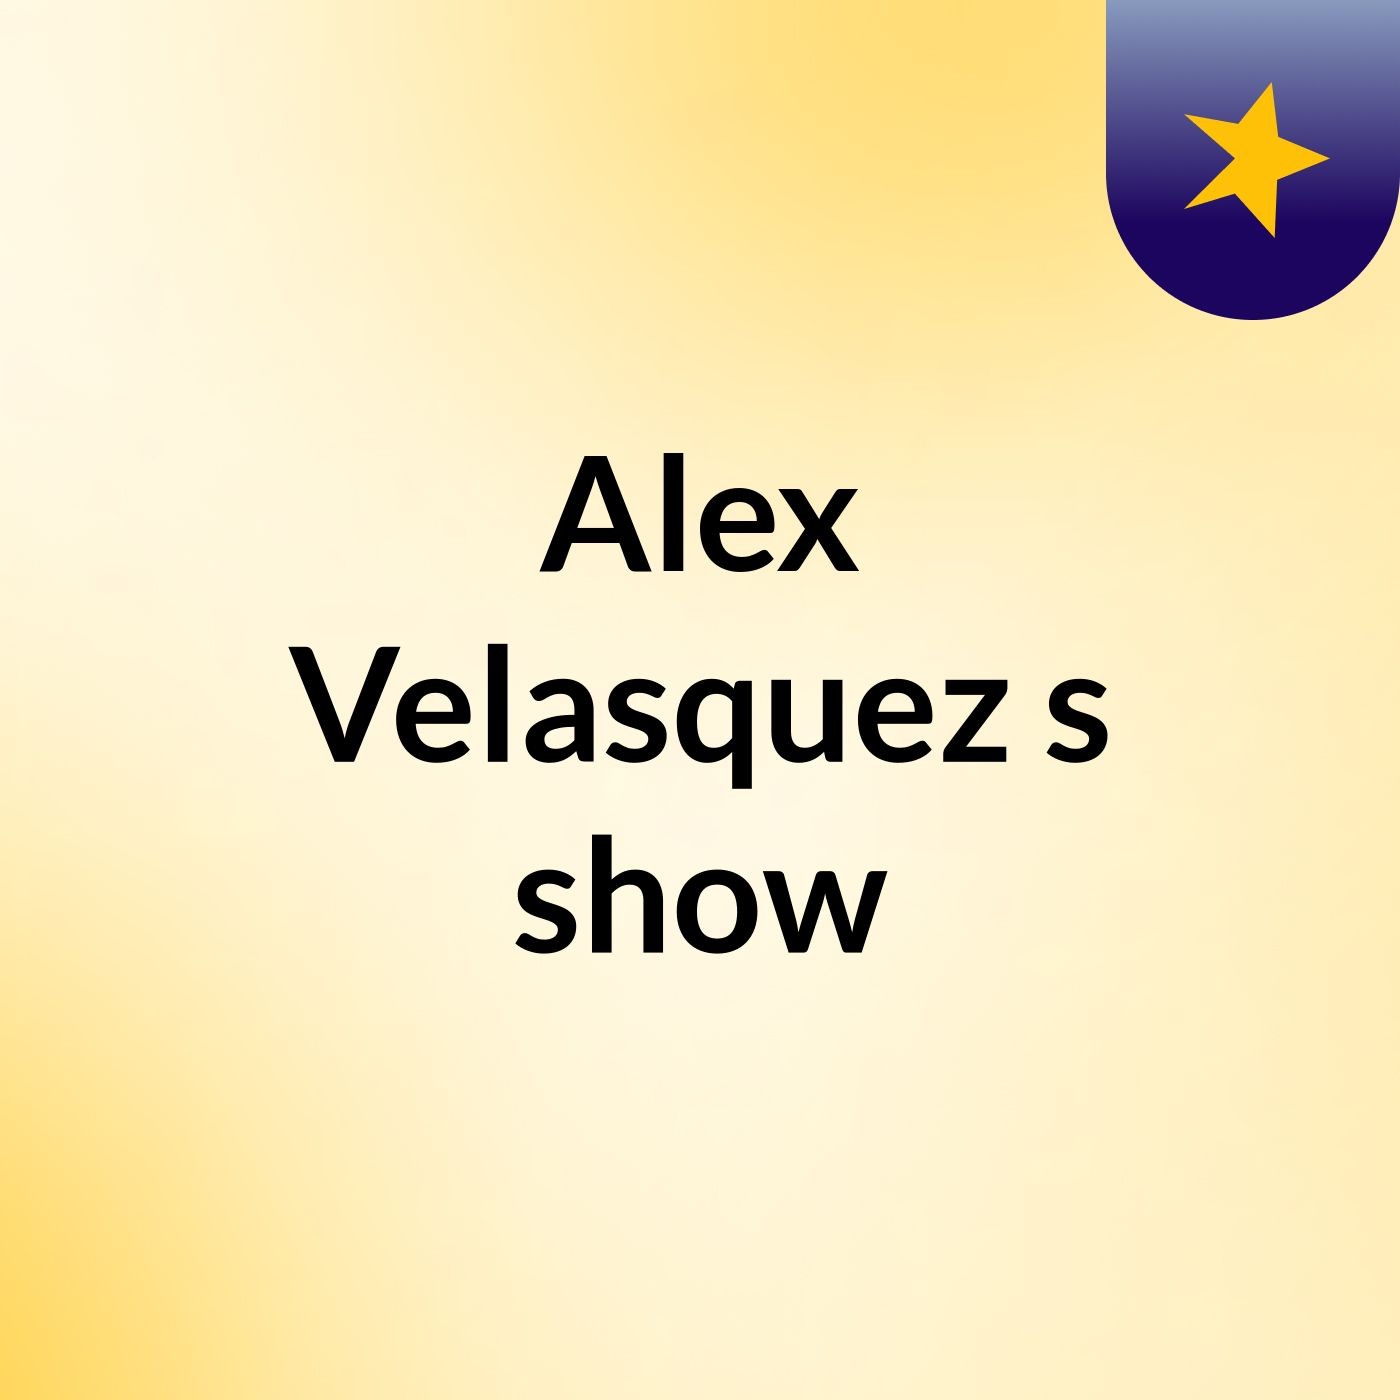 Alex Velasquez's show